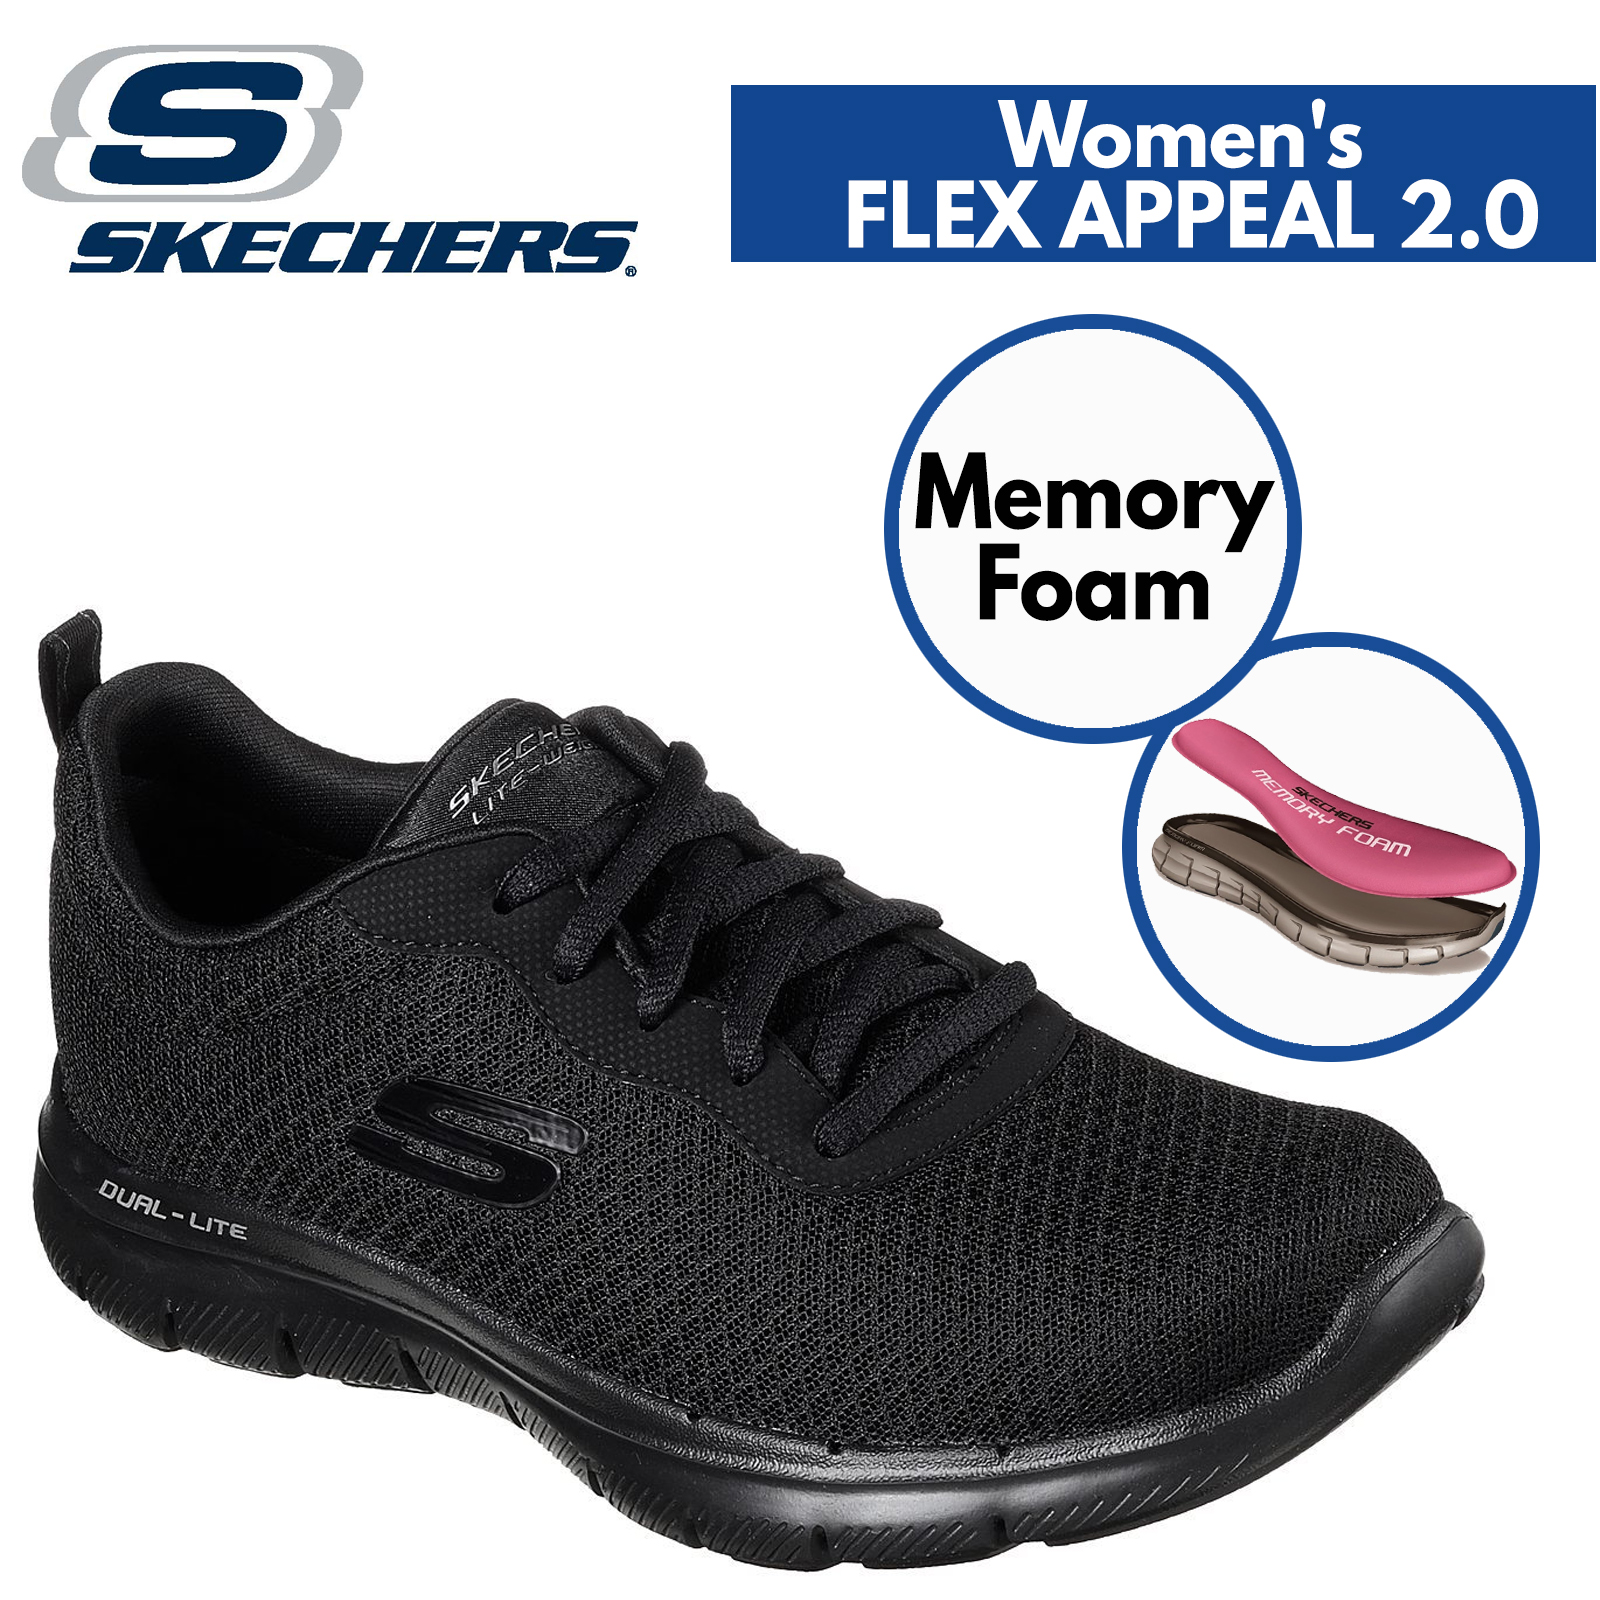 sketchers air cooled memory foam shoes